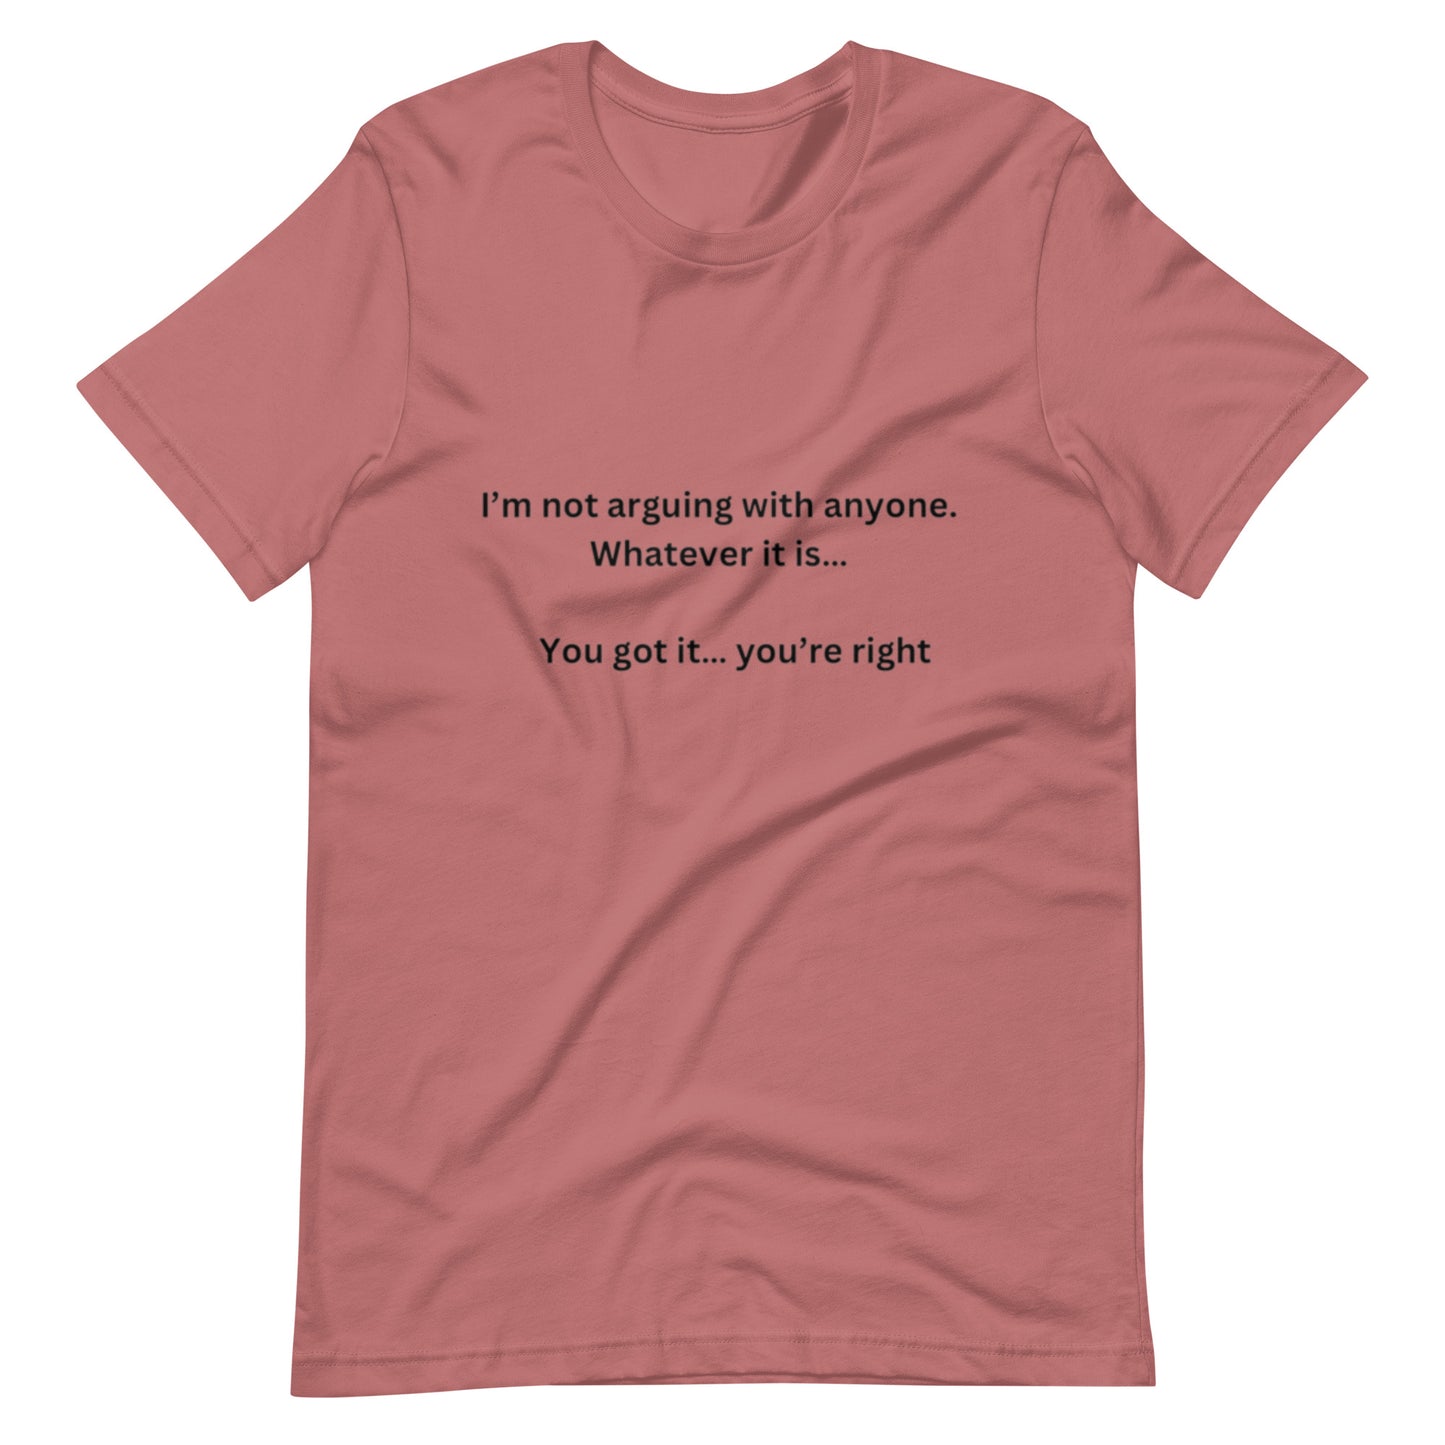 Unisex "You Got It" t-shirt